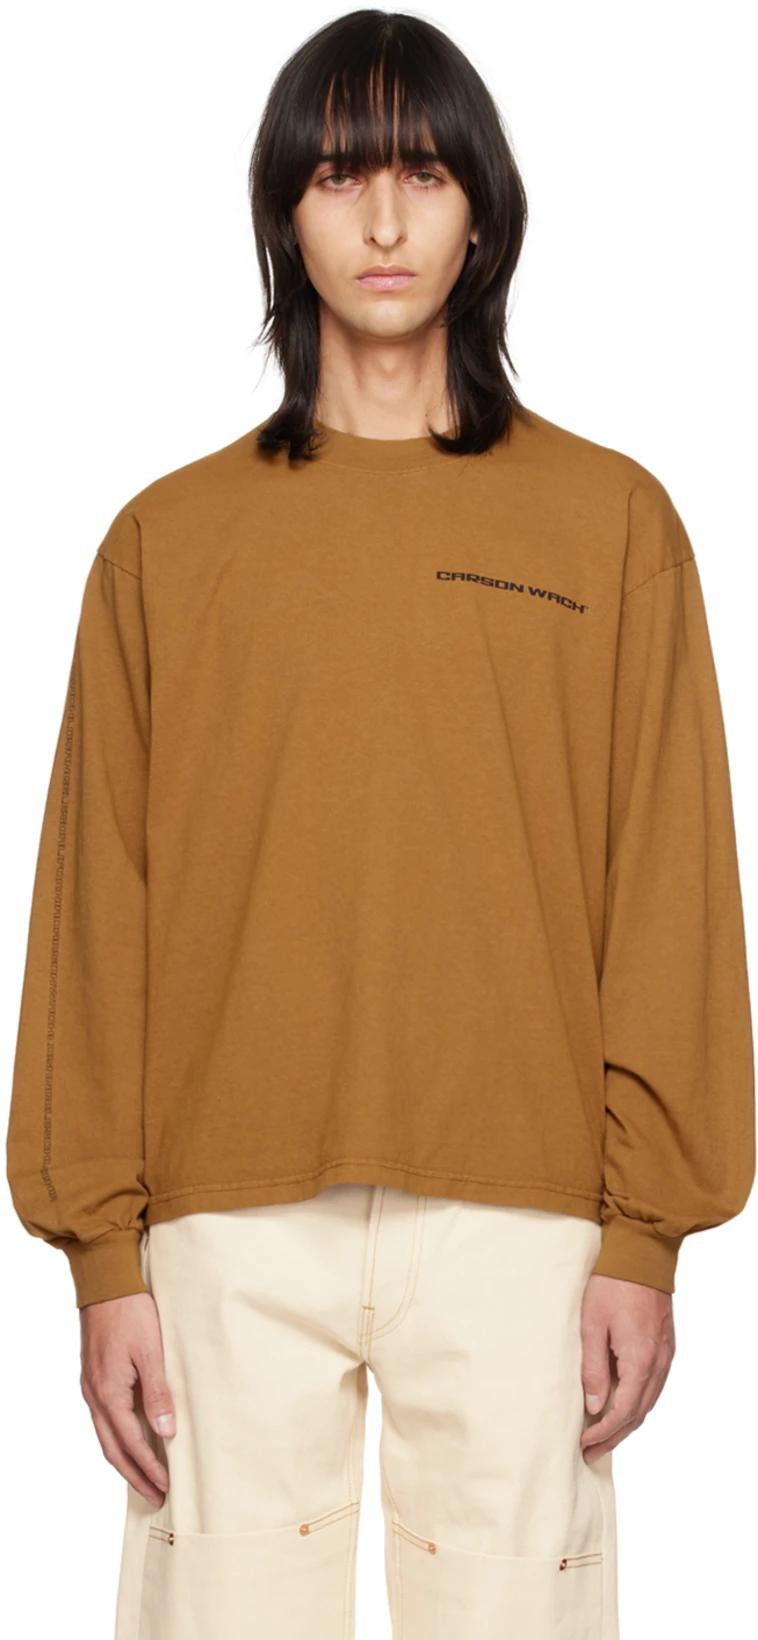 Brown Printed Long Sleeve T-Shirt by CARSON WACH